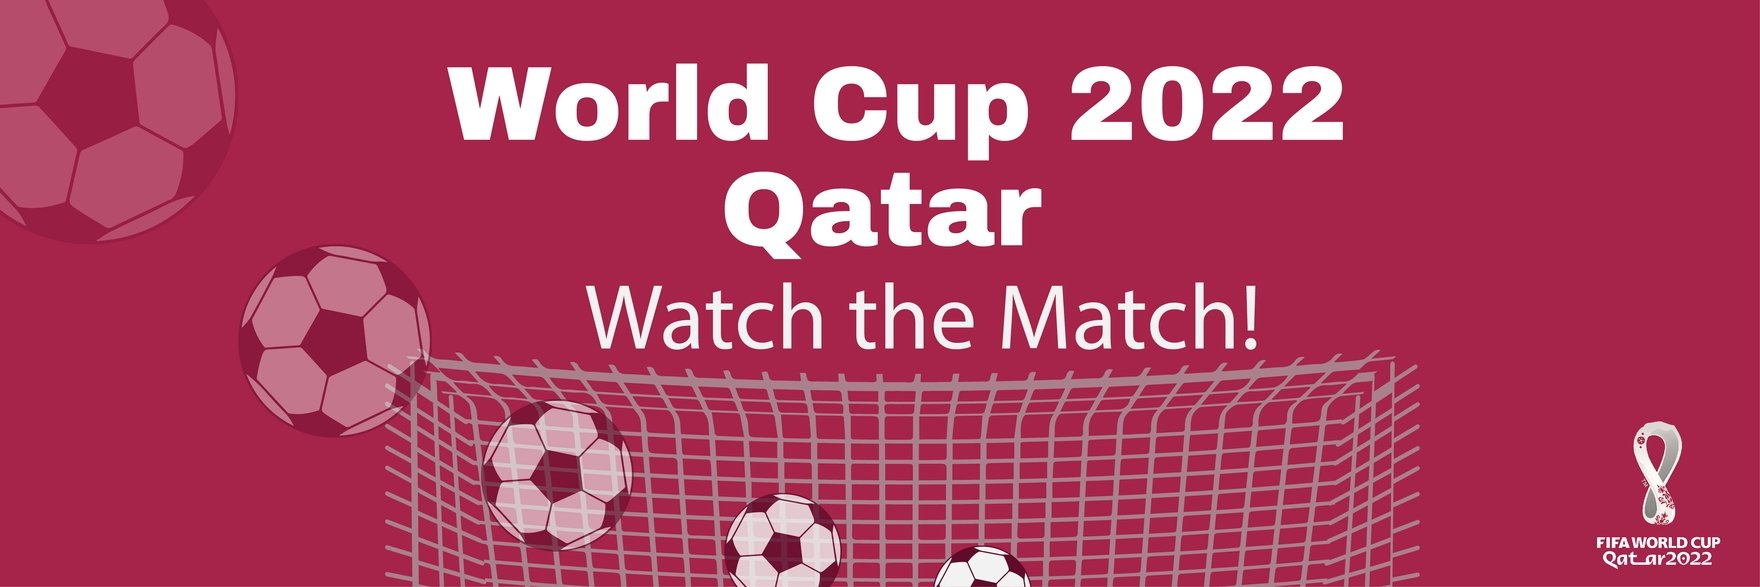 World Cup 2022 Twitter Banner